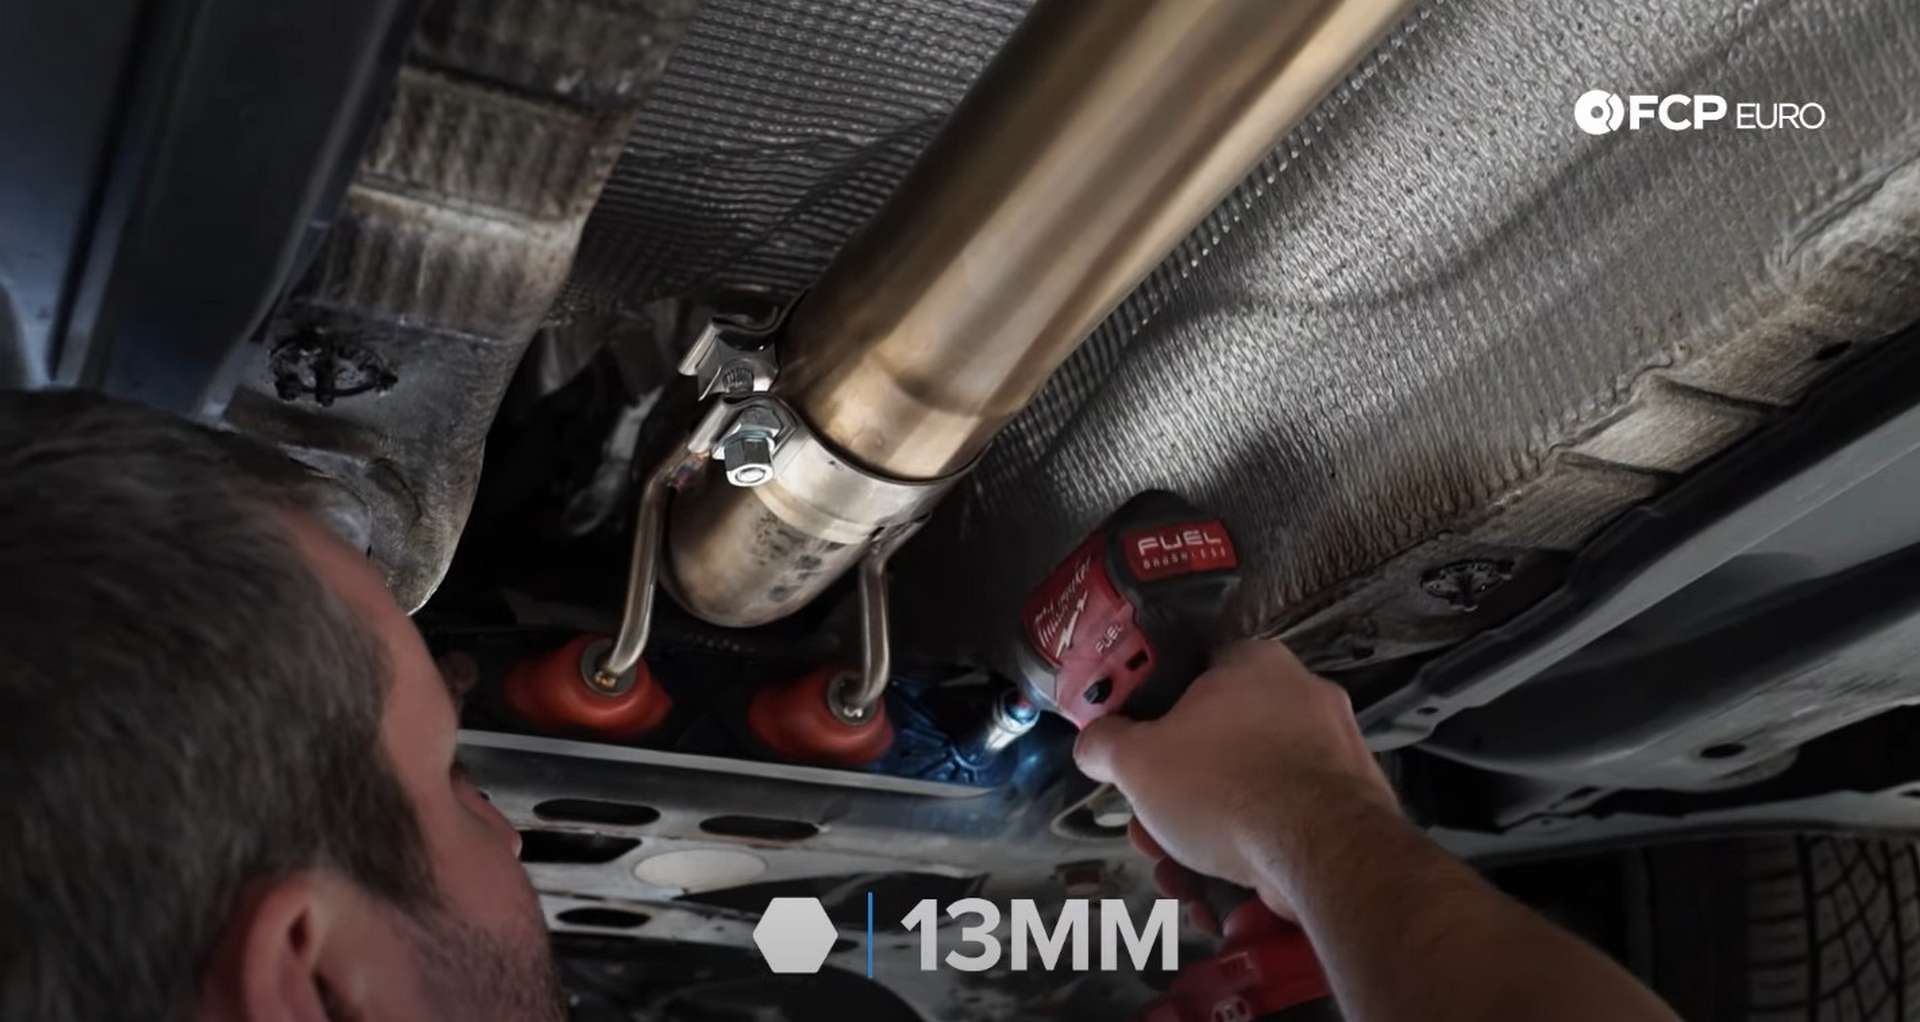 DIY MK7 VW GTI Turbocharger Upgrade tightening the lower bracket bolts